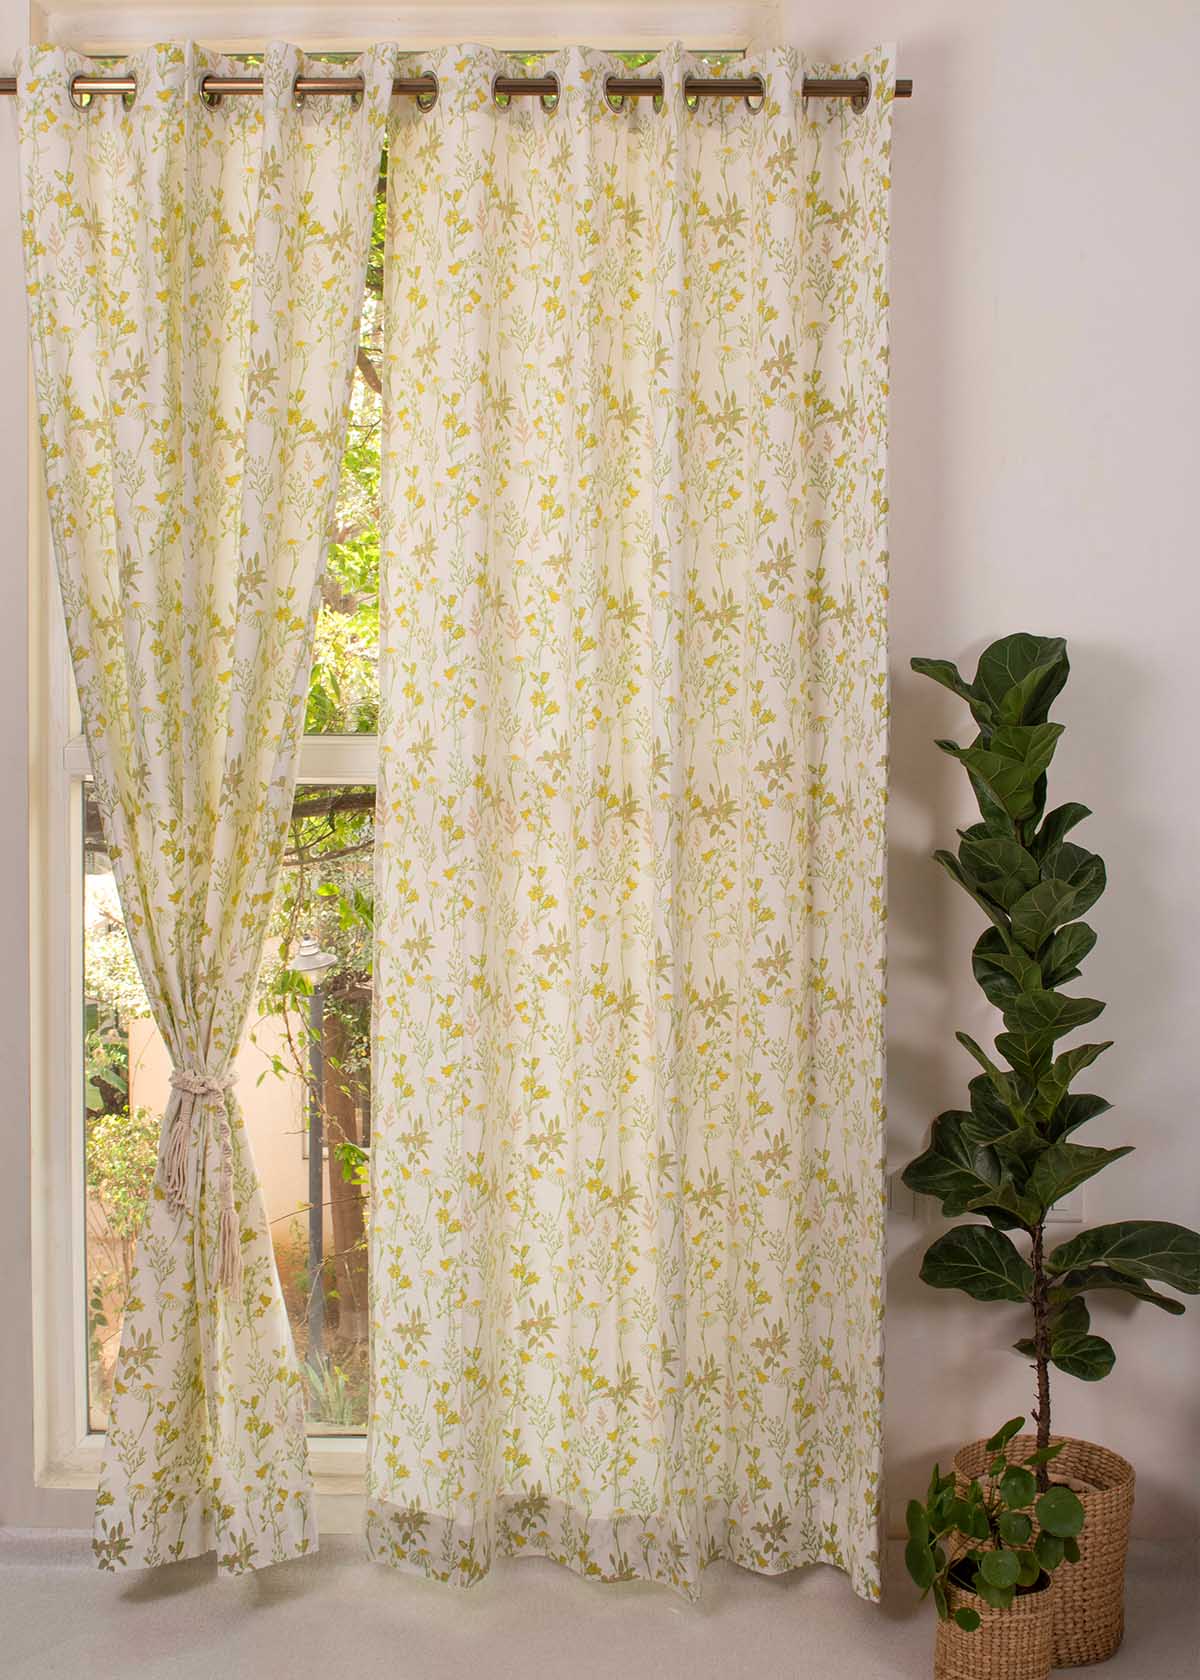 Tulip Garden 100% Customizable Cotton floral curtain for kids room, living room & bed room - Room darkening